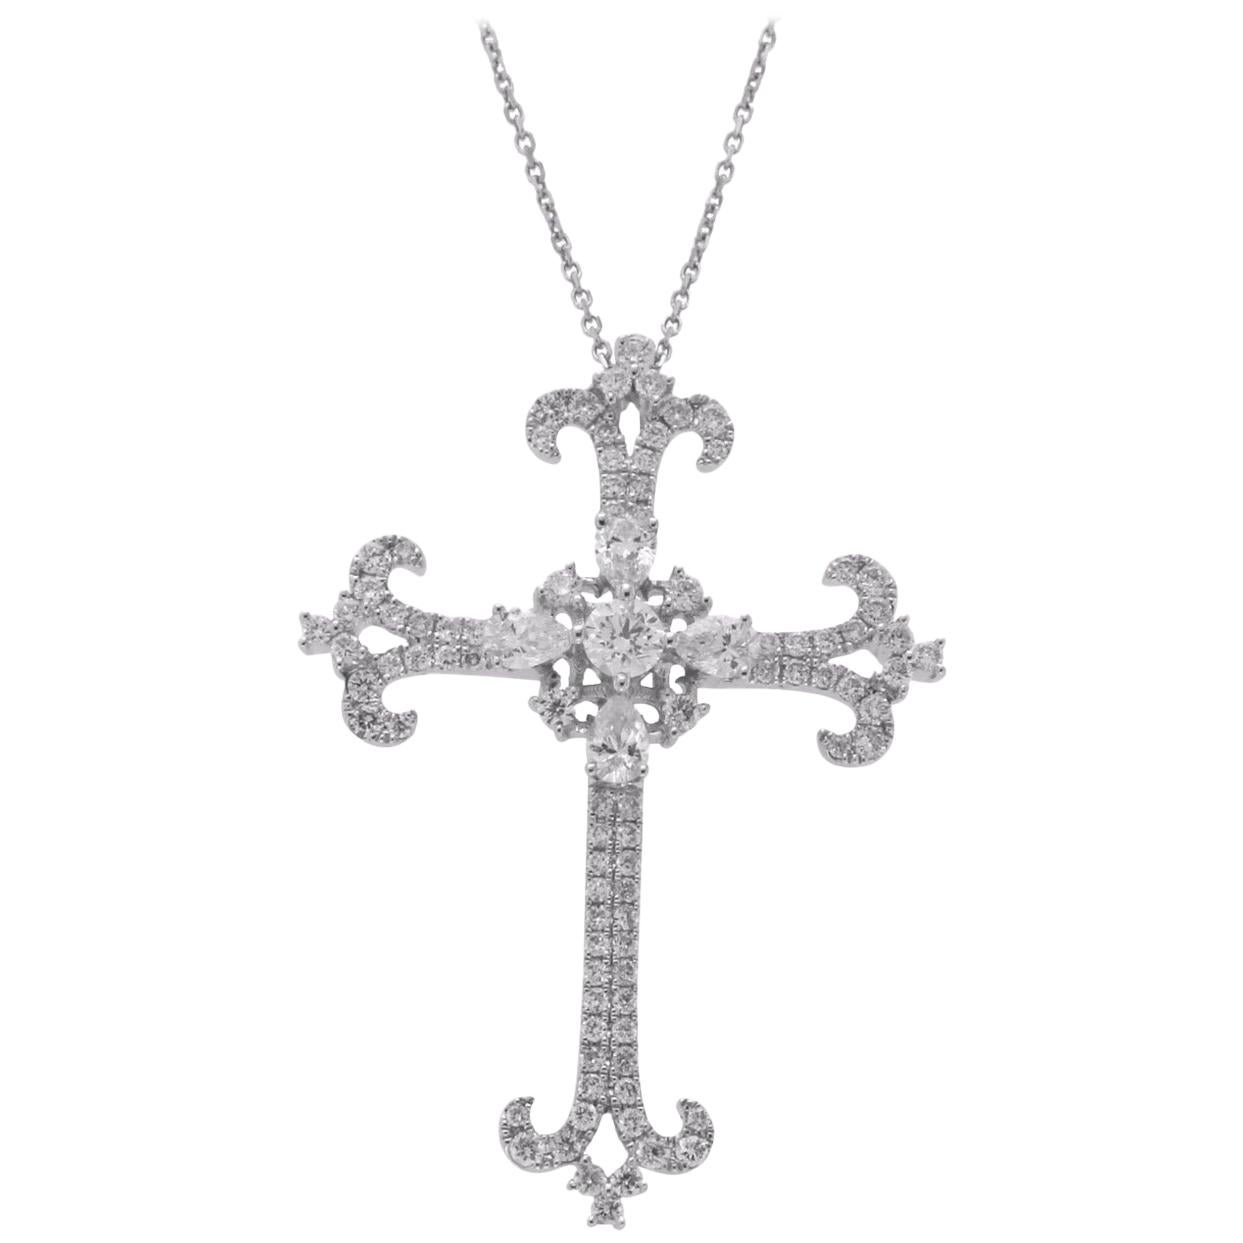 Pendentif croix en or blanc 18 carats avec diamant de 0,82 carat et chaîne en or blanc 14 carats